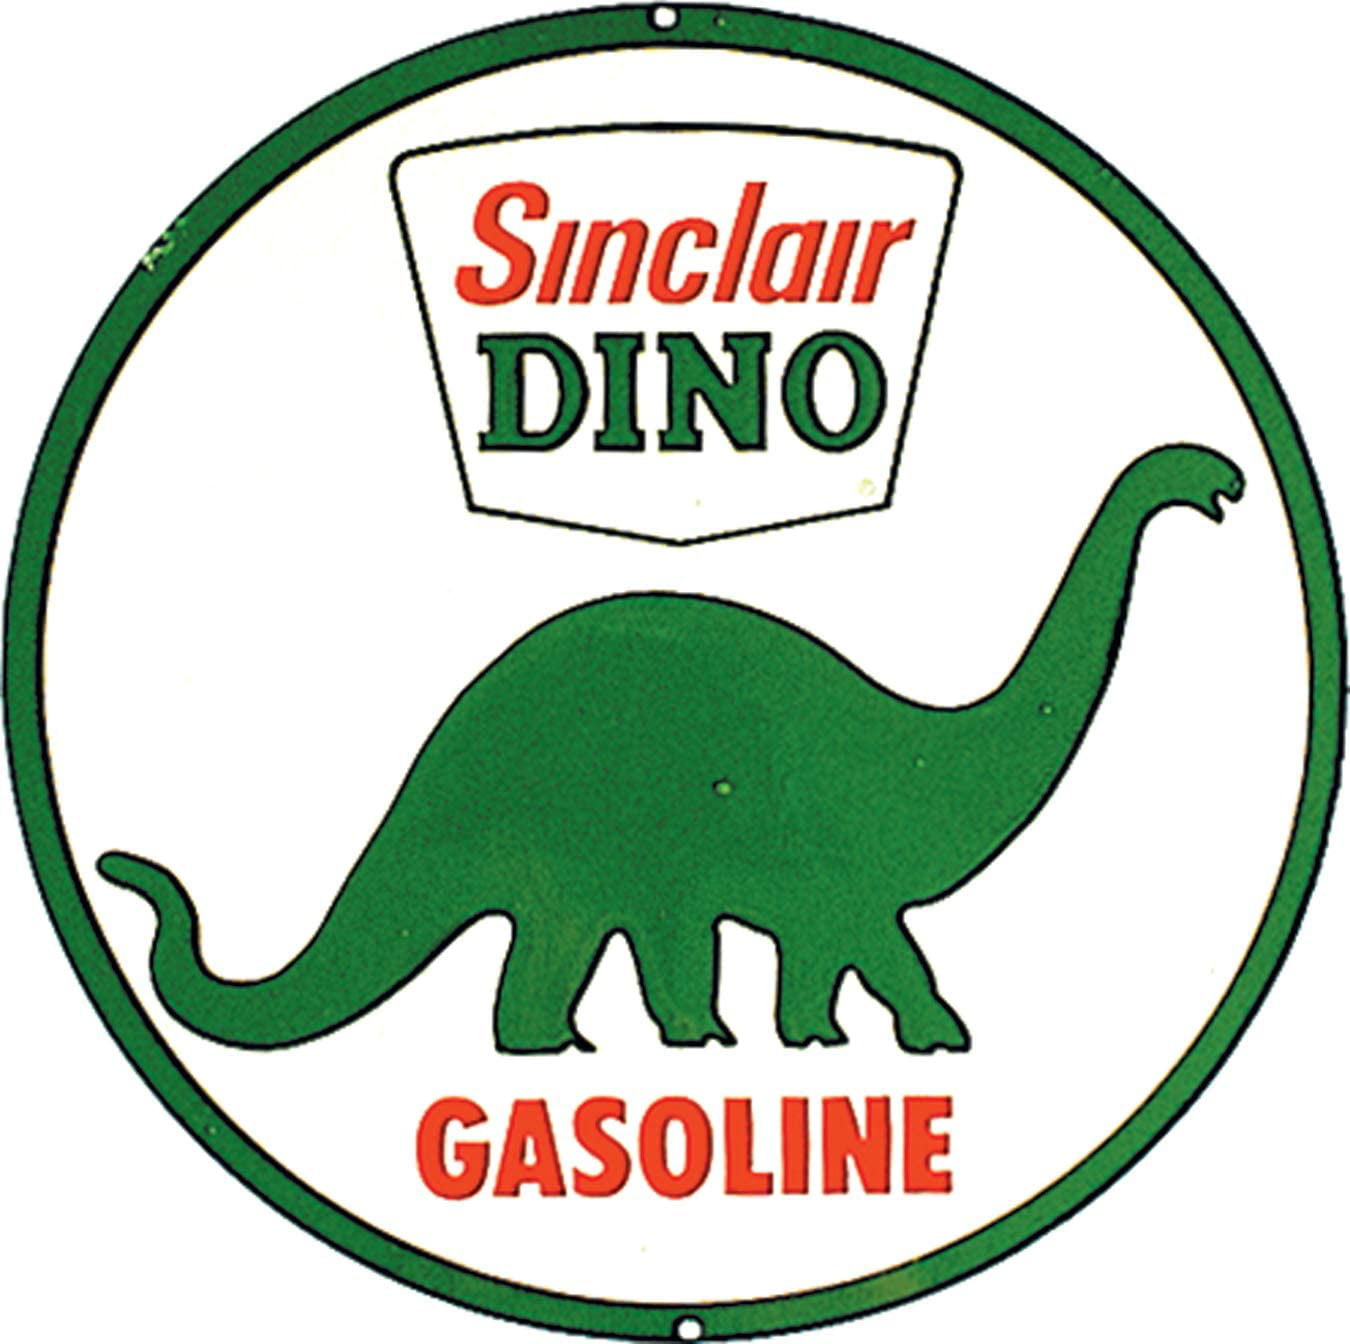 Sinclair Dino Gasoline Round Tin Sign 11.75" Diameter 